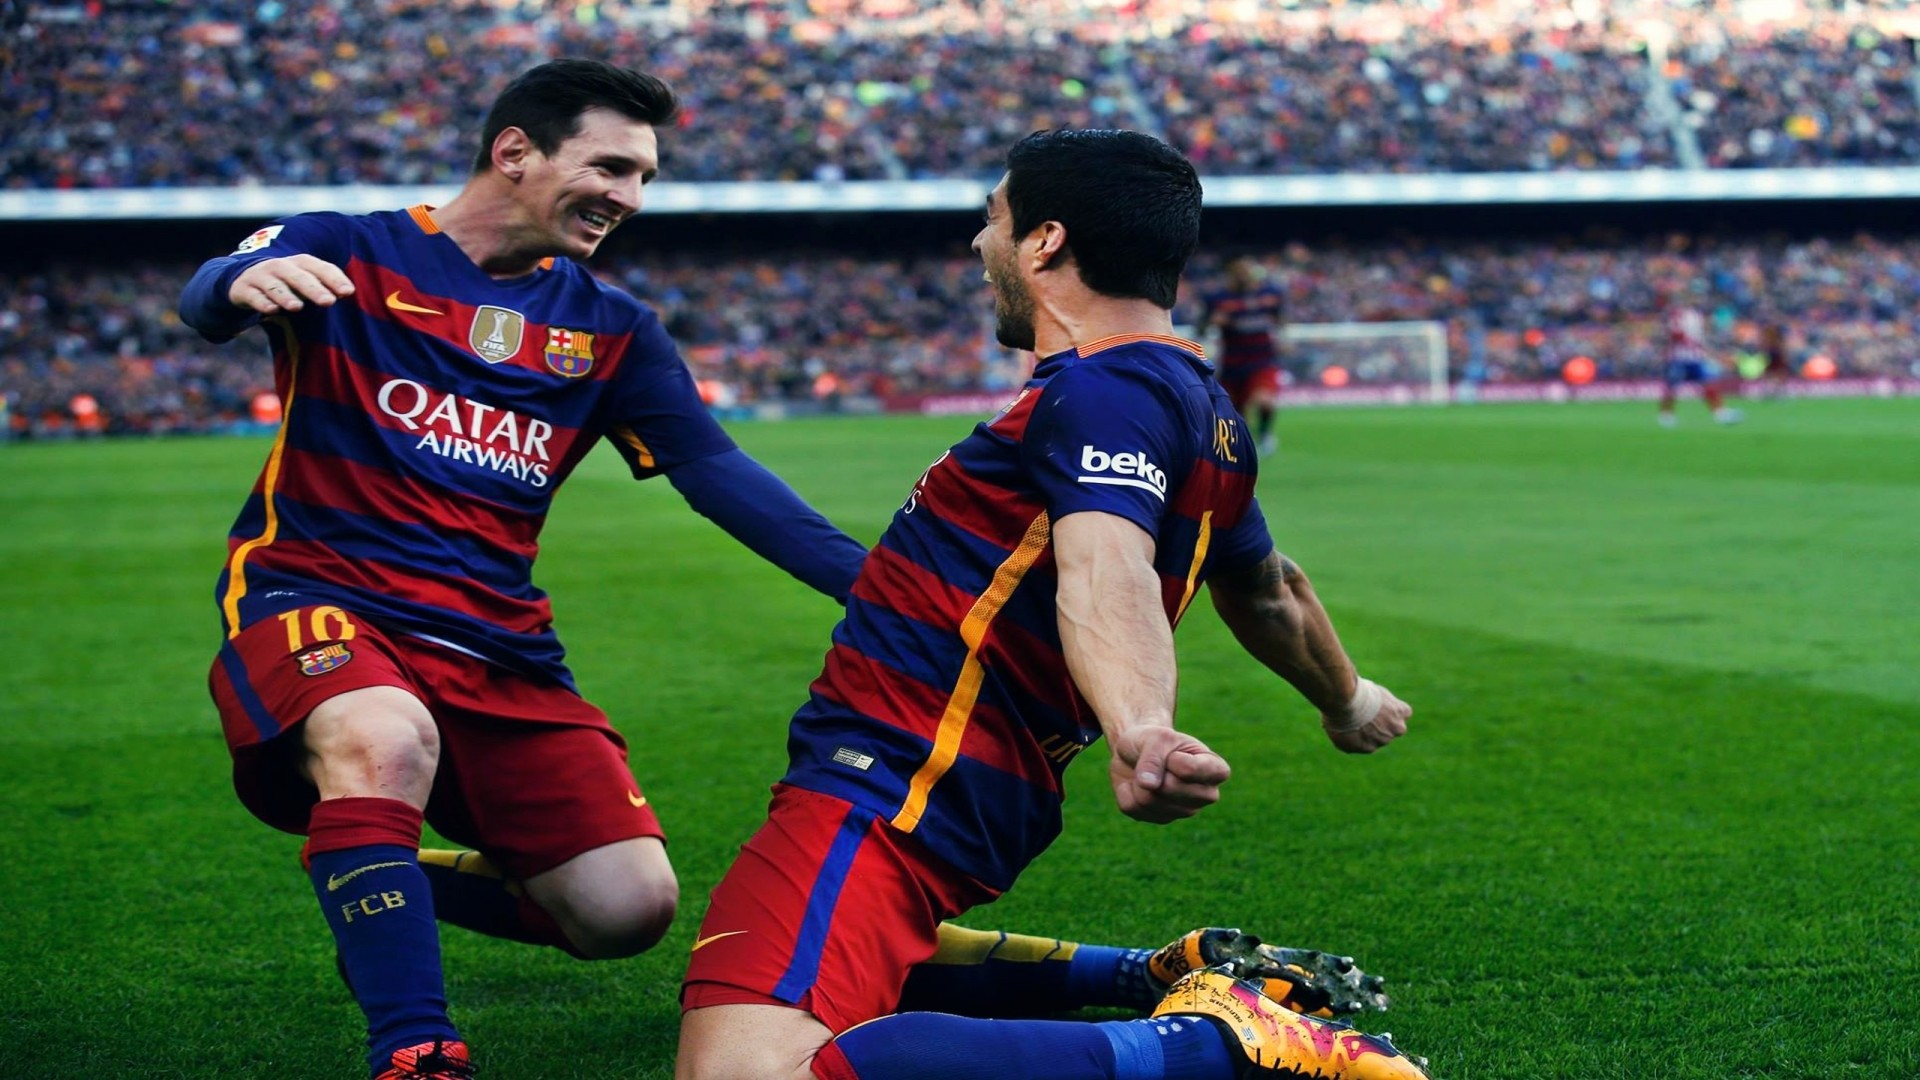 1920x1080 Barcelona Luis Suarez And Lionel Messi Goal Celebration. Wallpaper ...